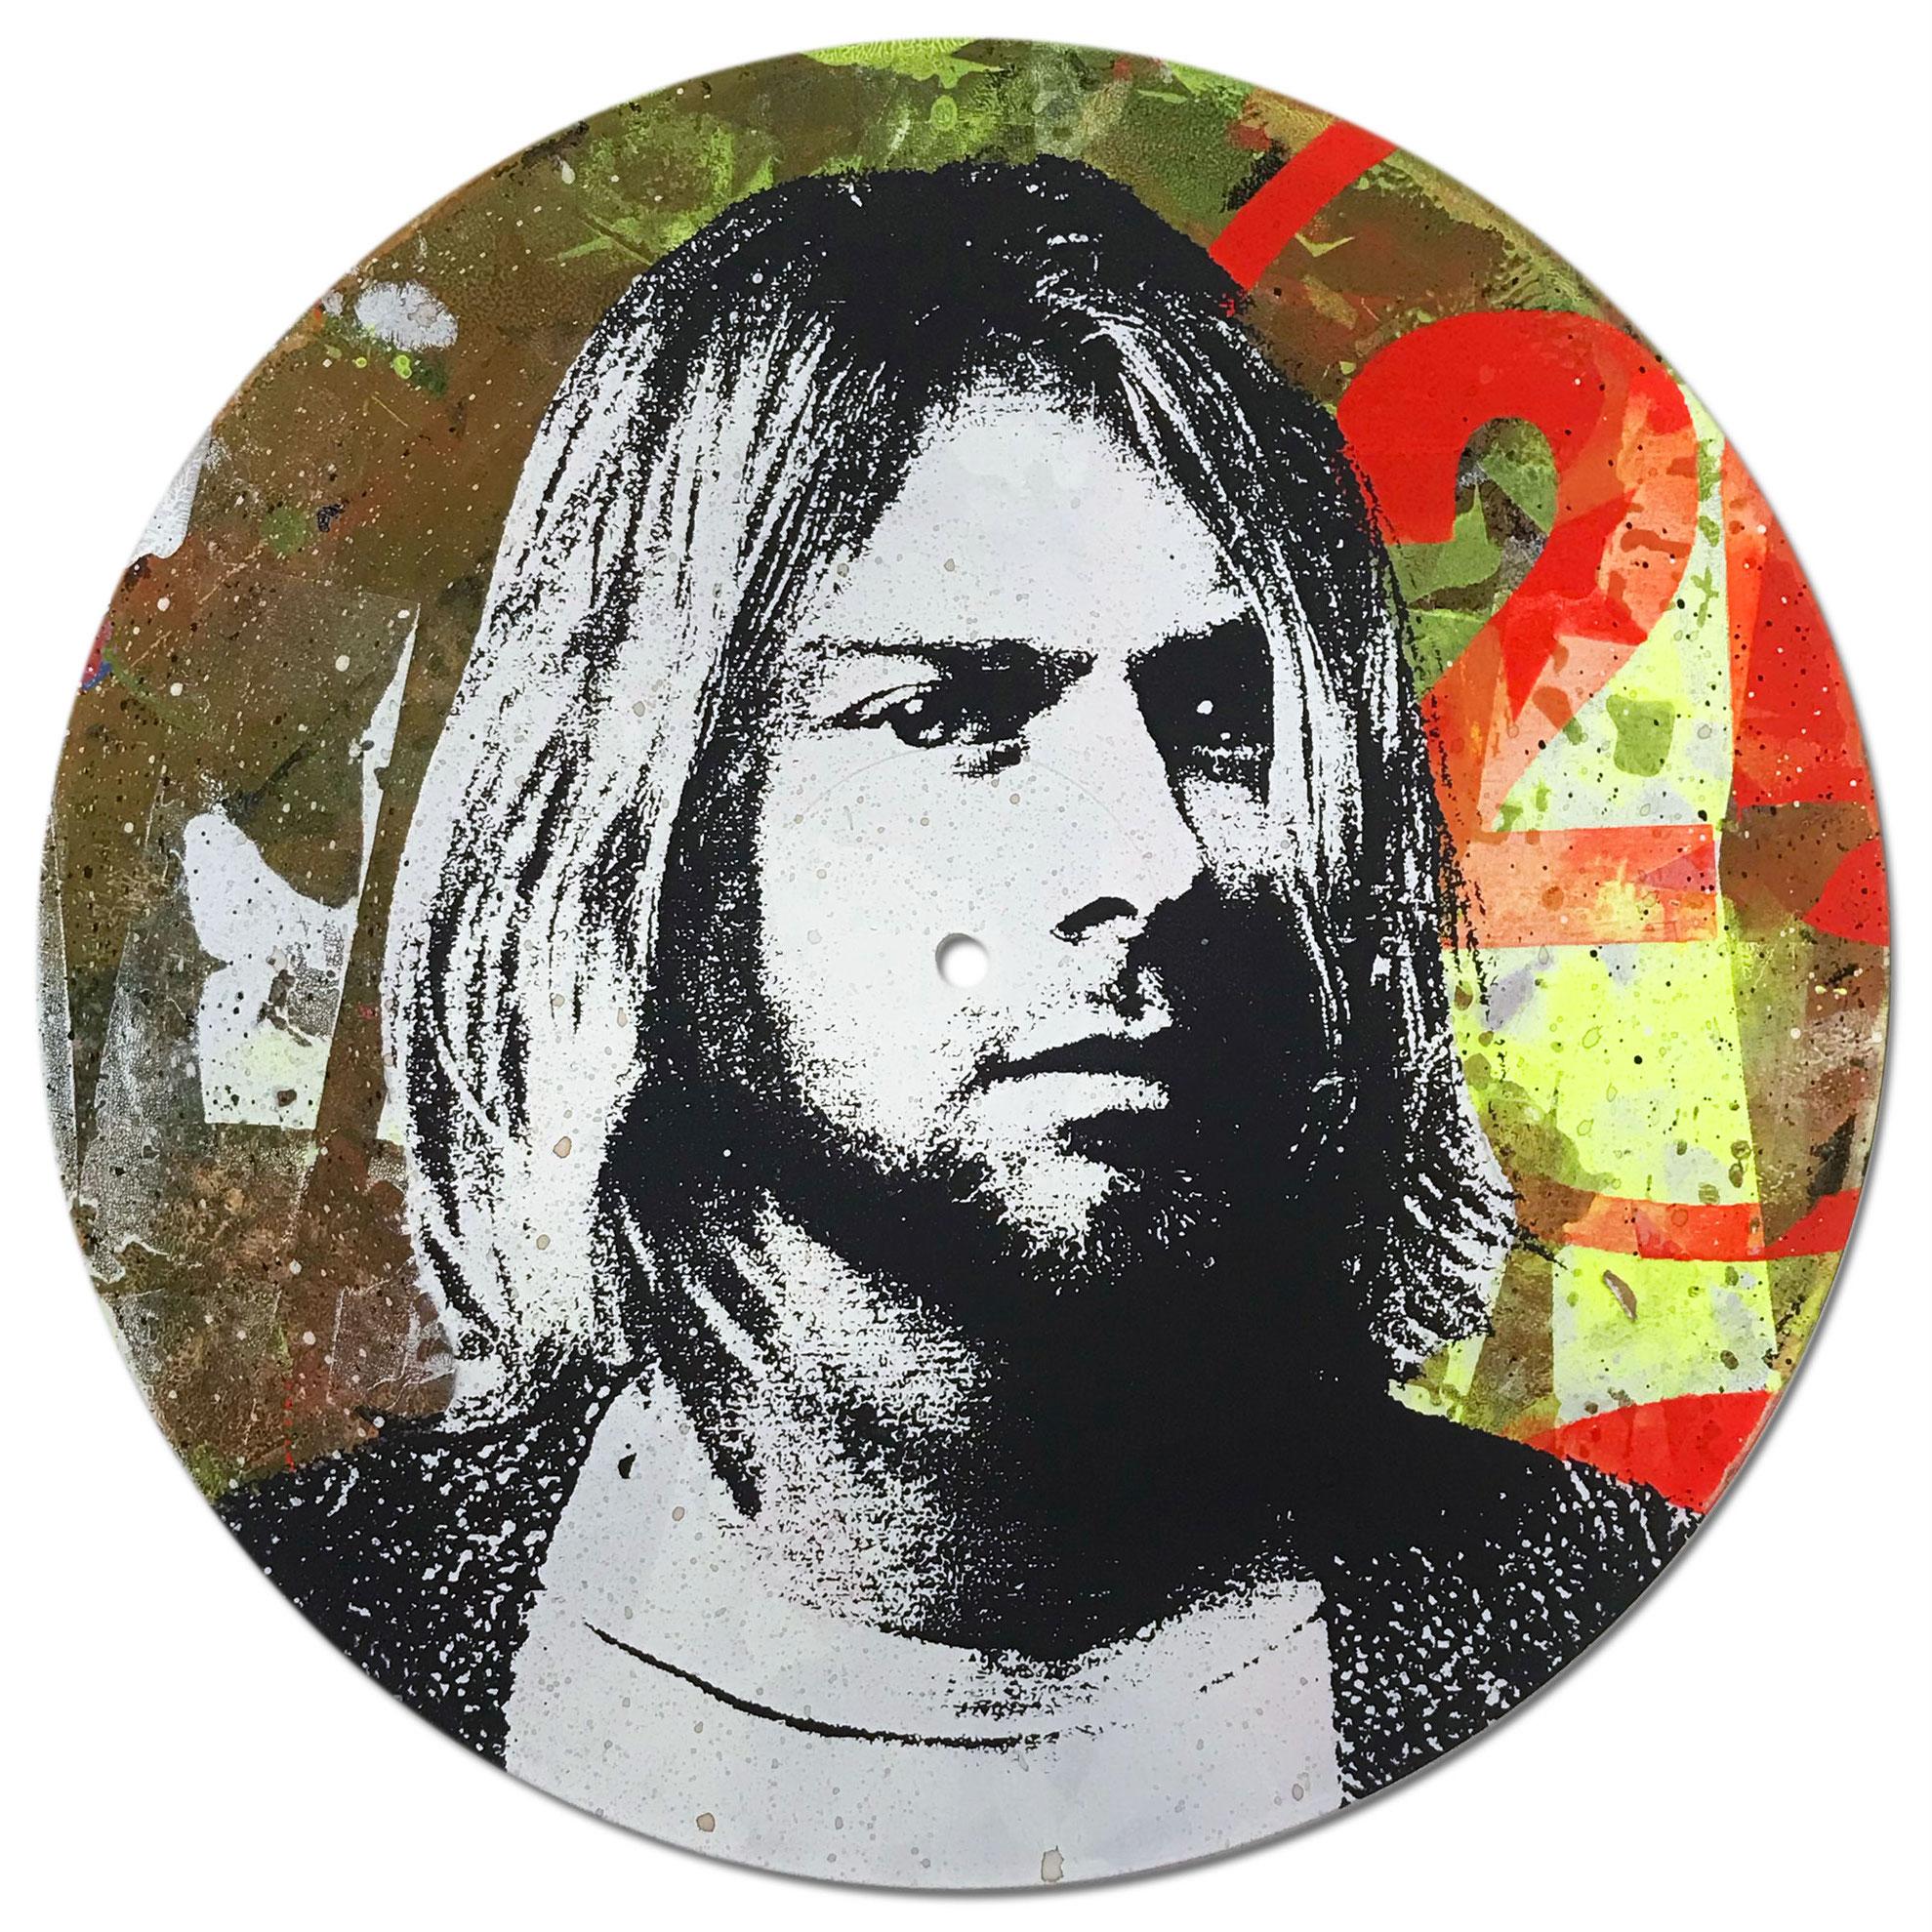 Kurt Cobain Vinyl 1-10, Greg Gossel Pop Art LP Record (Singles & Sets Available) For Sale 5